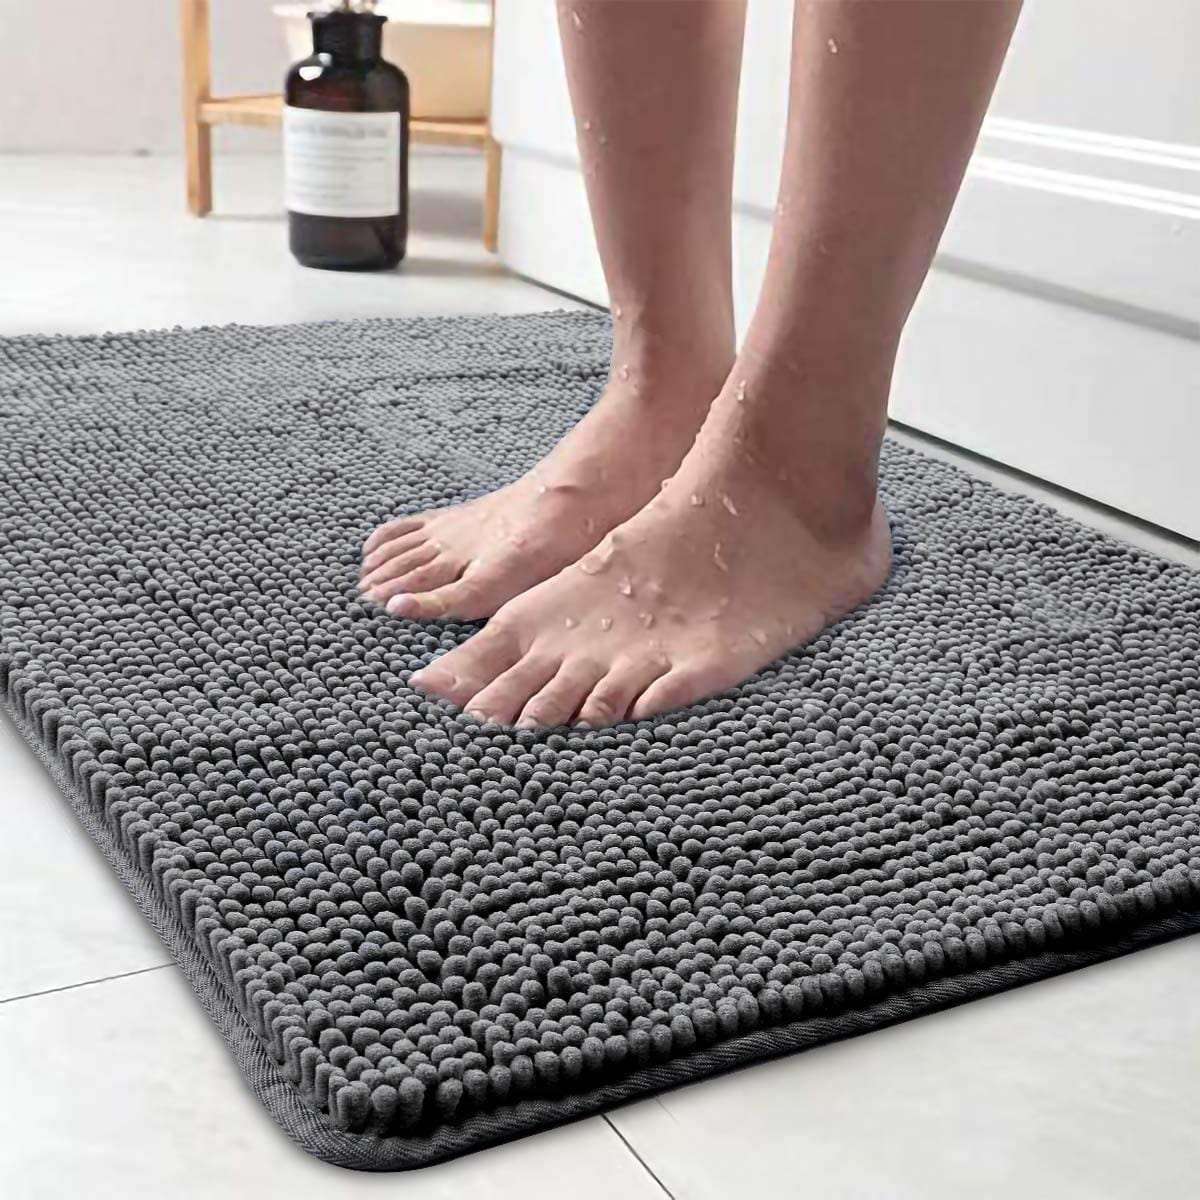 Bath mats